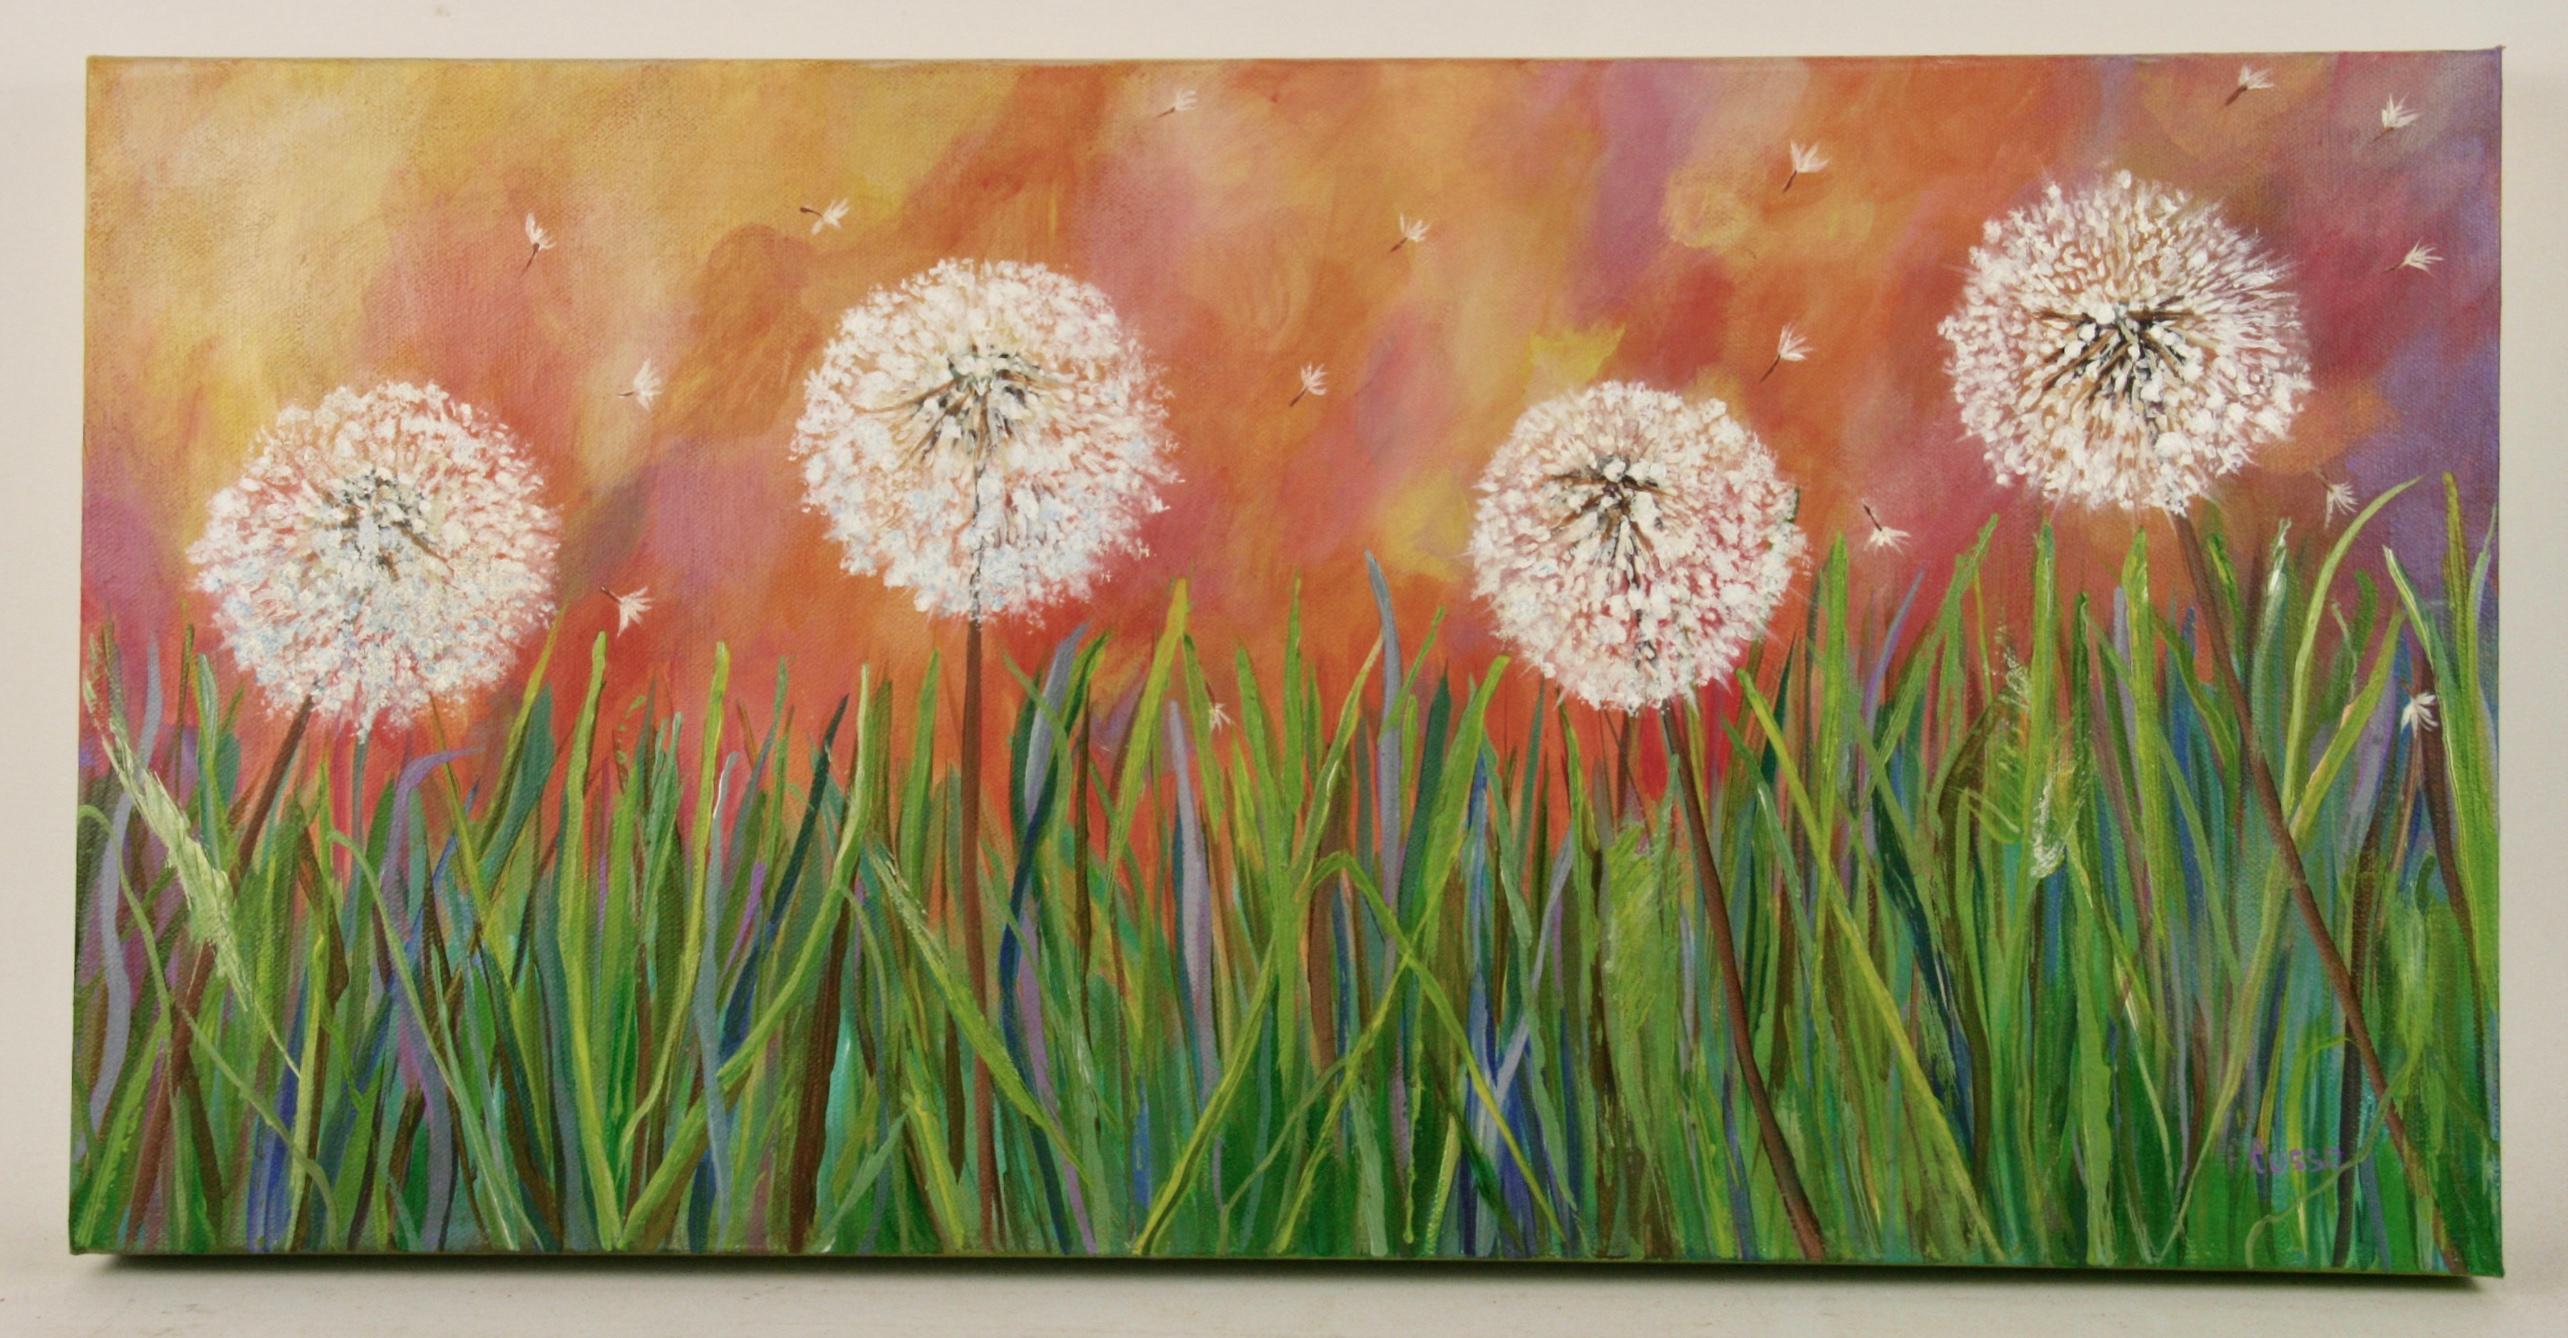  Dandelion Impressionist Landscape  Painting For Sale 7